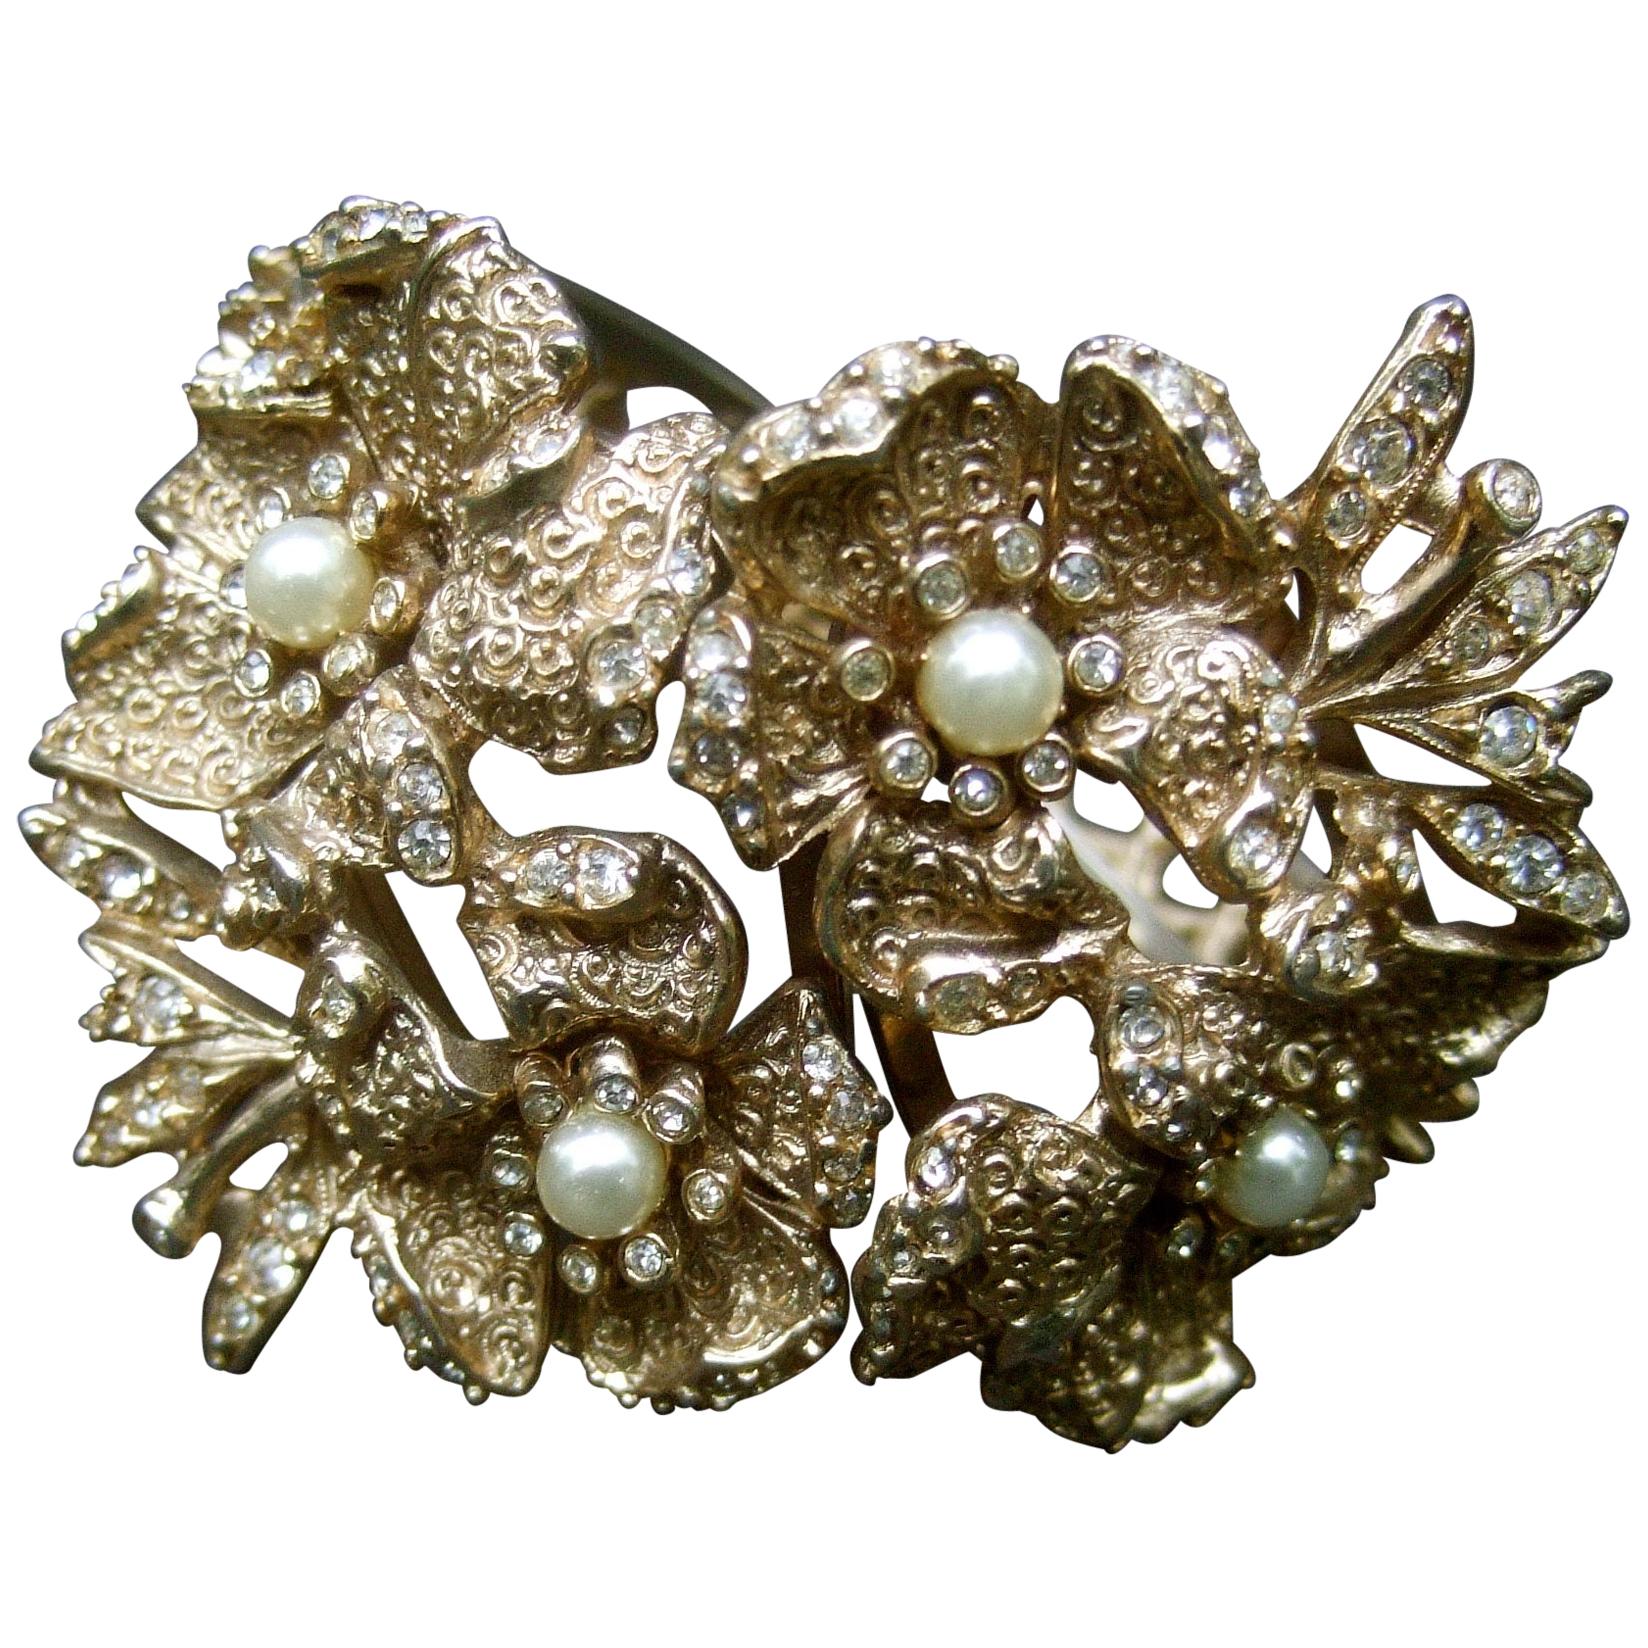 Hobe' Wide Gilt Metal Jewel Encrusted Hinged Cuff Bracelet c 1960s